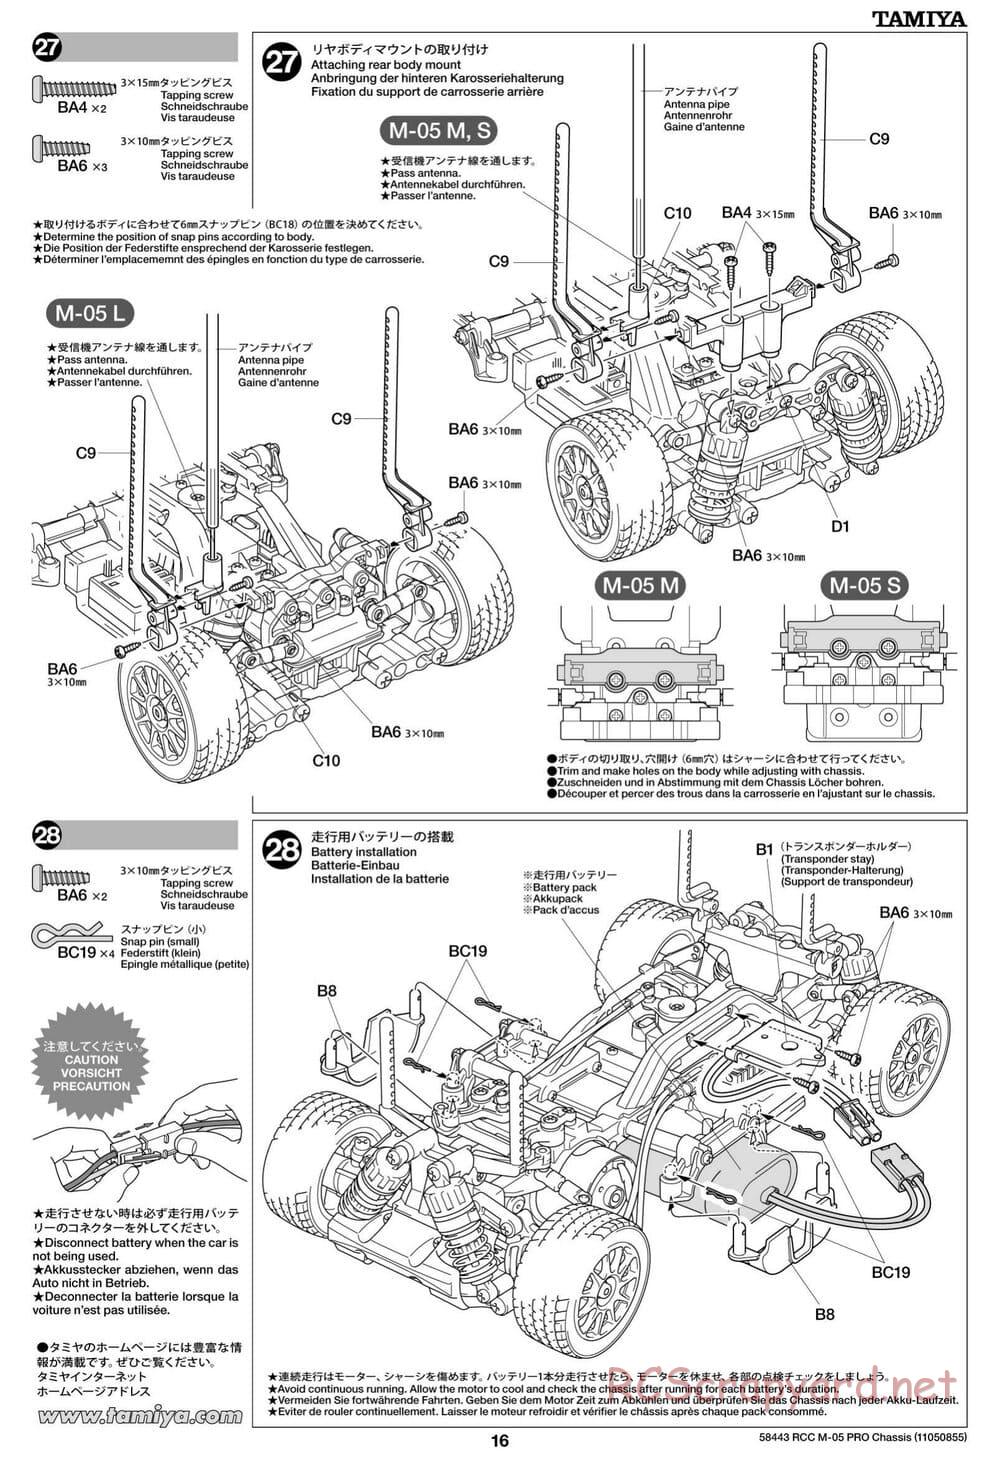 Tamiya - M05-Pro Chassis - Manual - Page 16